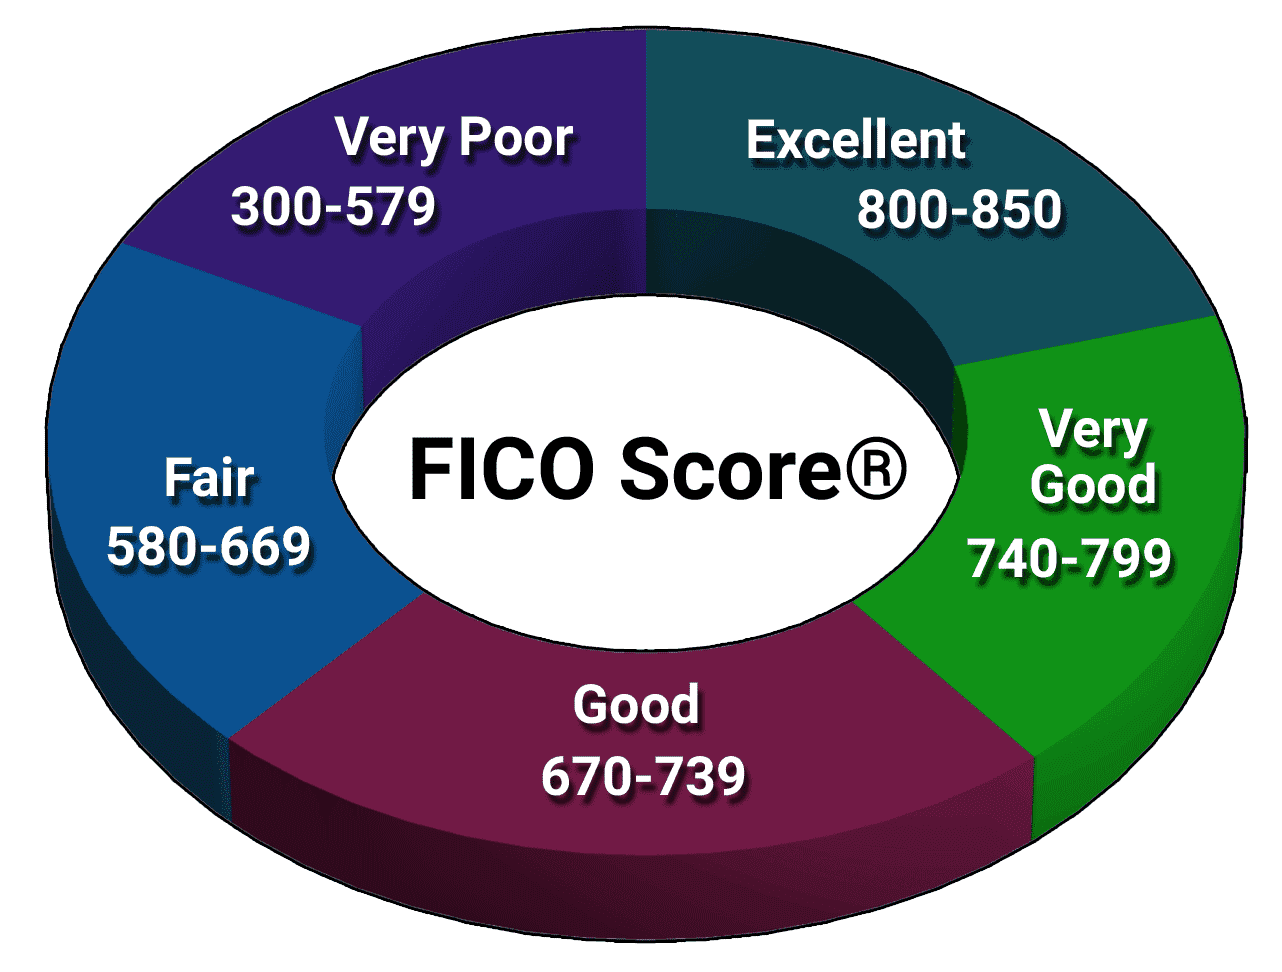 FICO Credit Score Range